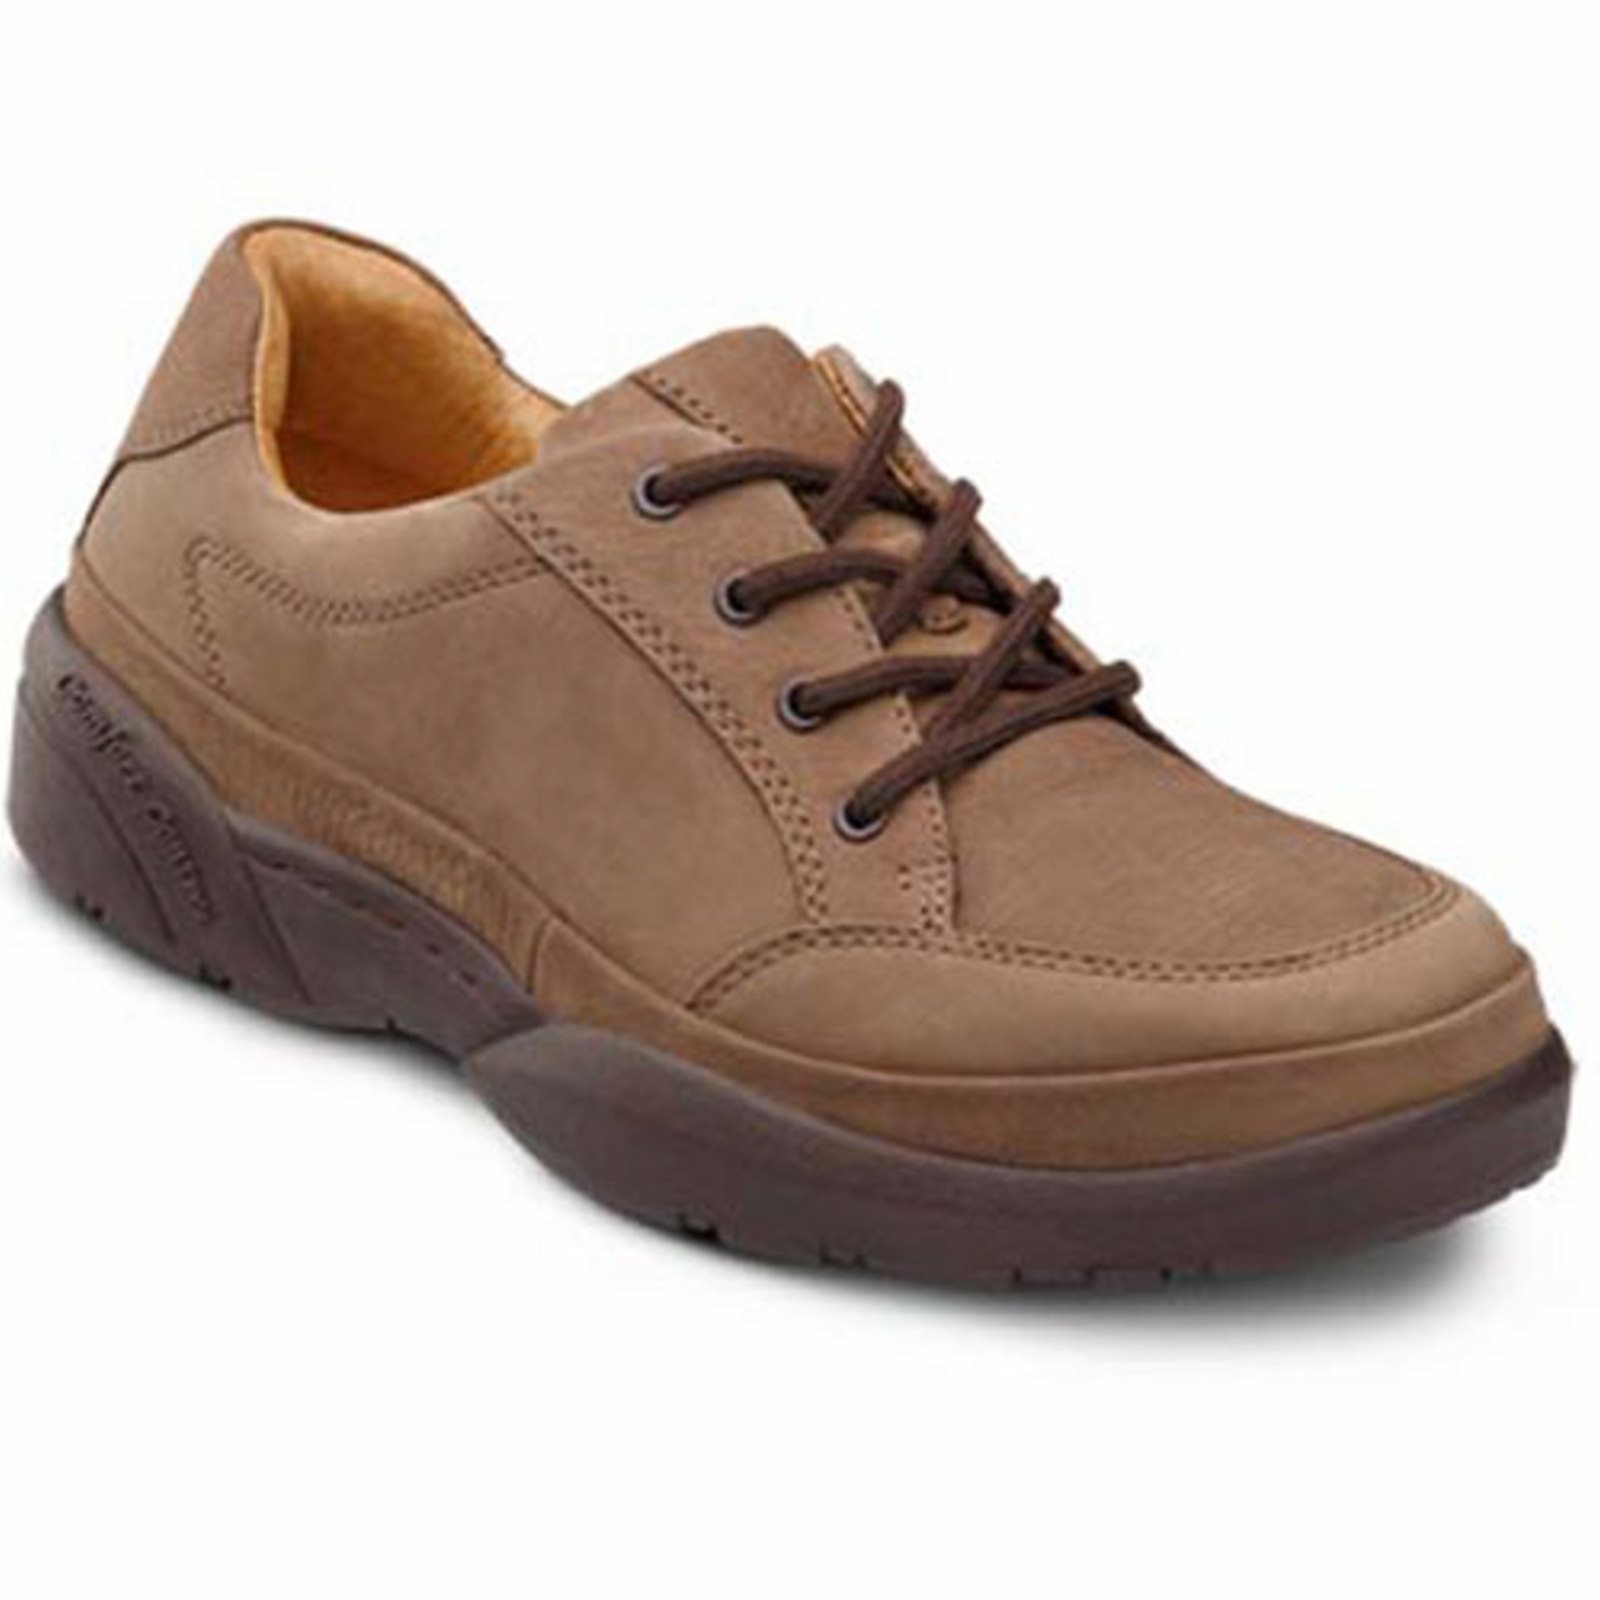 Dr. Comfort Justin Men's Casual Shoe: 8.5 Wide (E/2E) Chestnut Suede Lace - image 1 of 4